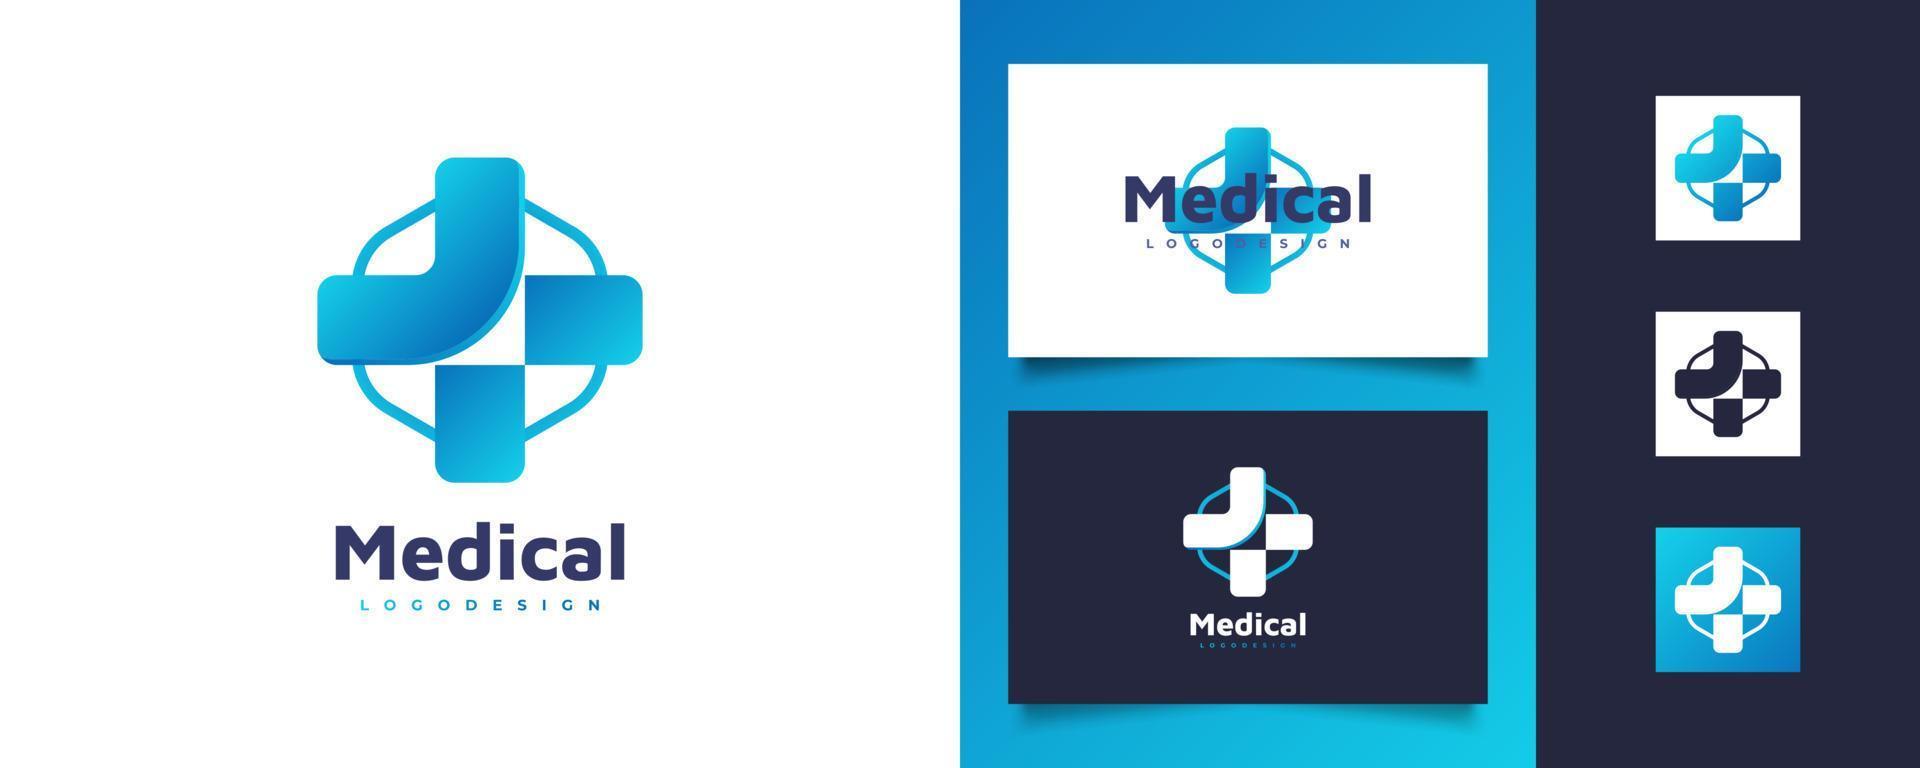 Blue Cross Logo for Hospital, Pharmacy, Drug Store, or Clinic Logo Identity. Cross with Hexagon Shape Logo for Healthcare Business vector